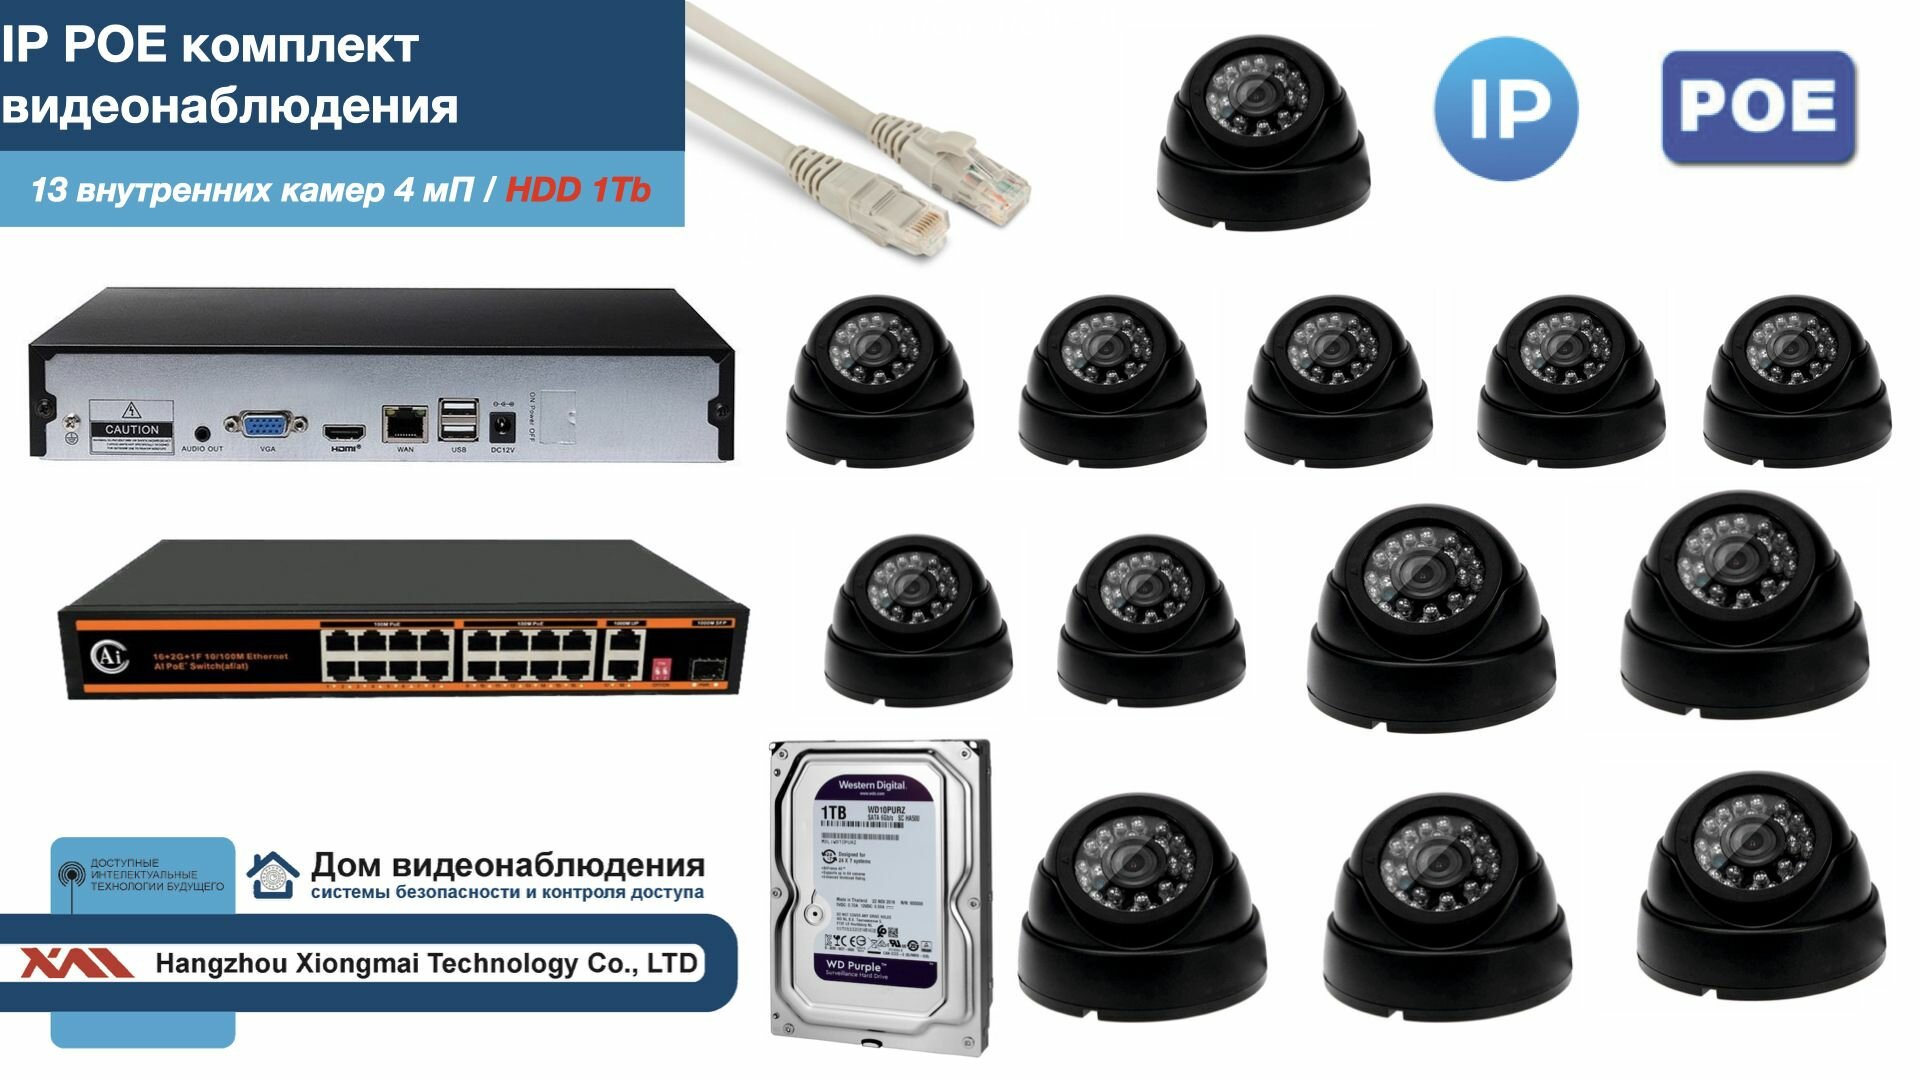 Полный IP POE комплект видеонаблюдения на 13 камер (KIT13IPPOE300B4MP-HDD1Tb)